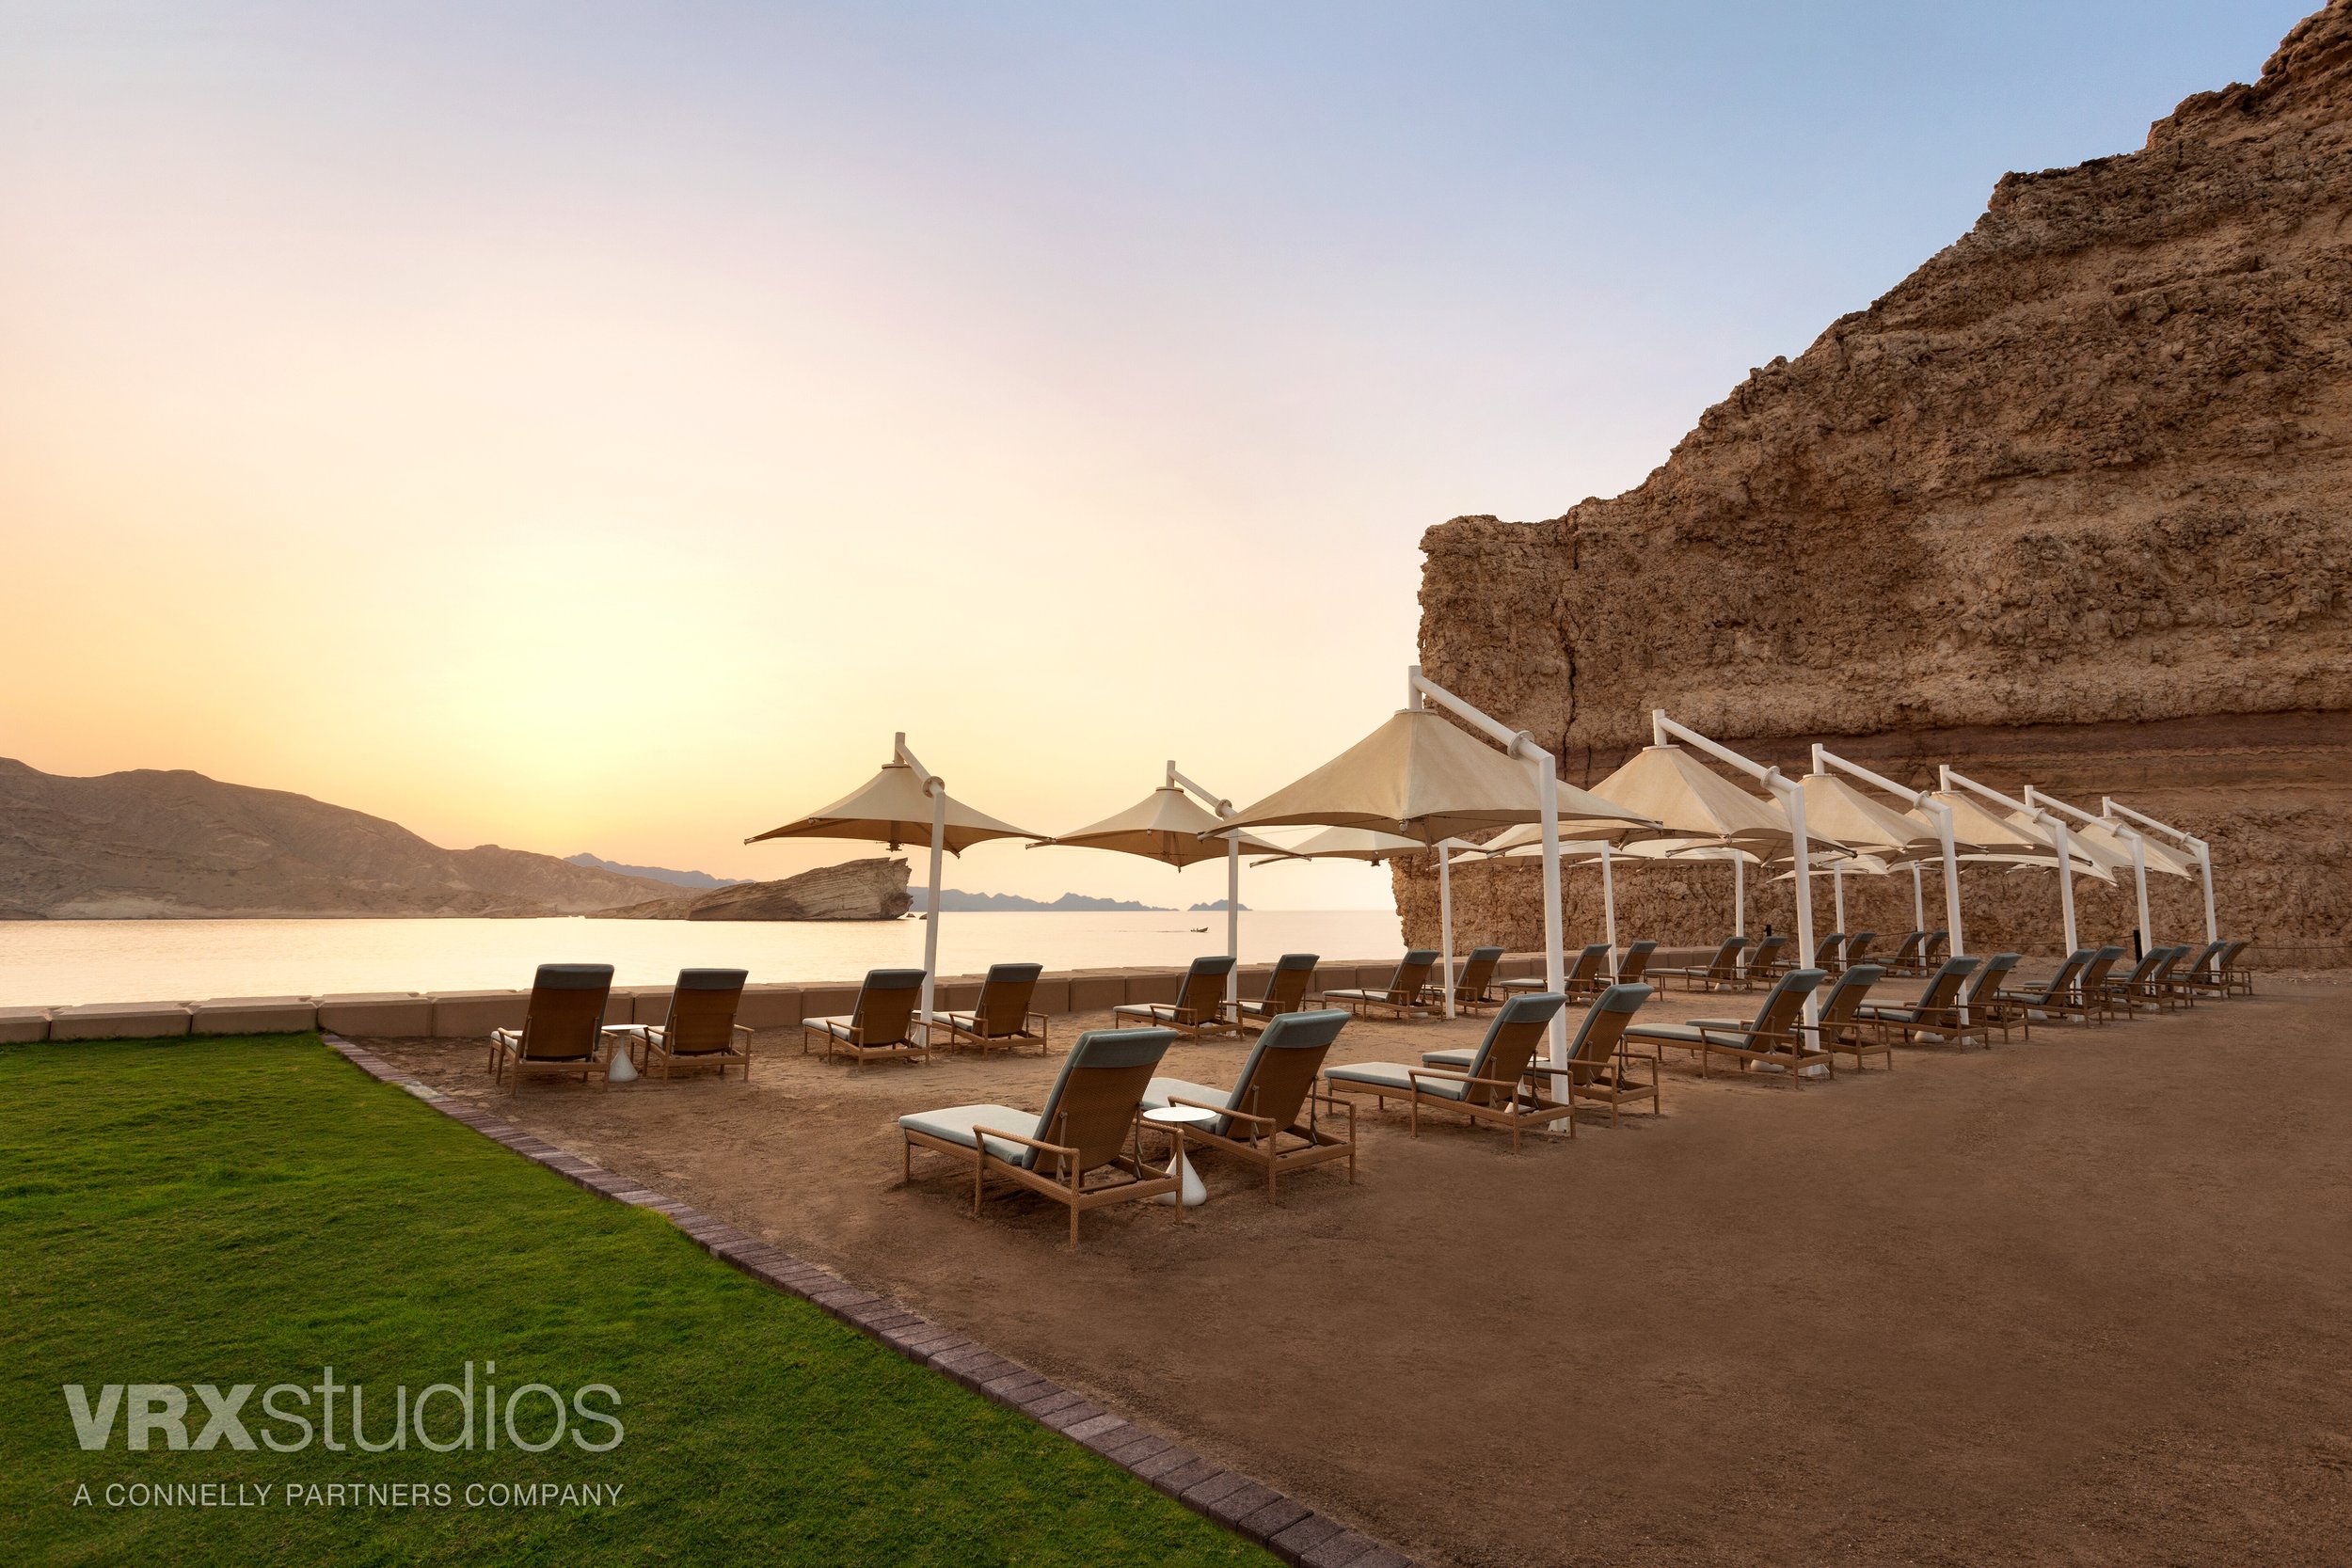  Client: VRX Studios • Project: Shangri-La Al Husn Resort and Spa, Oman • Photographer: Marcelo Barbosa • Produced by: VRX Studios 21/01/2020 